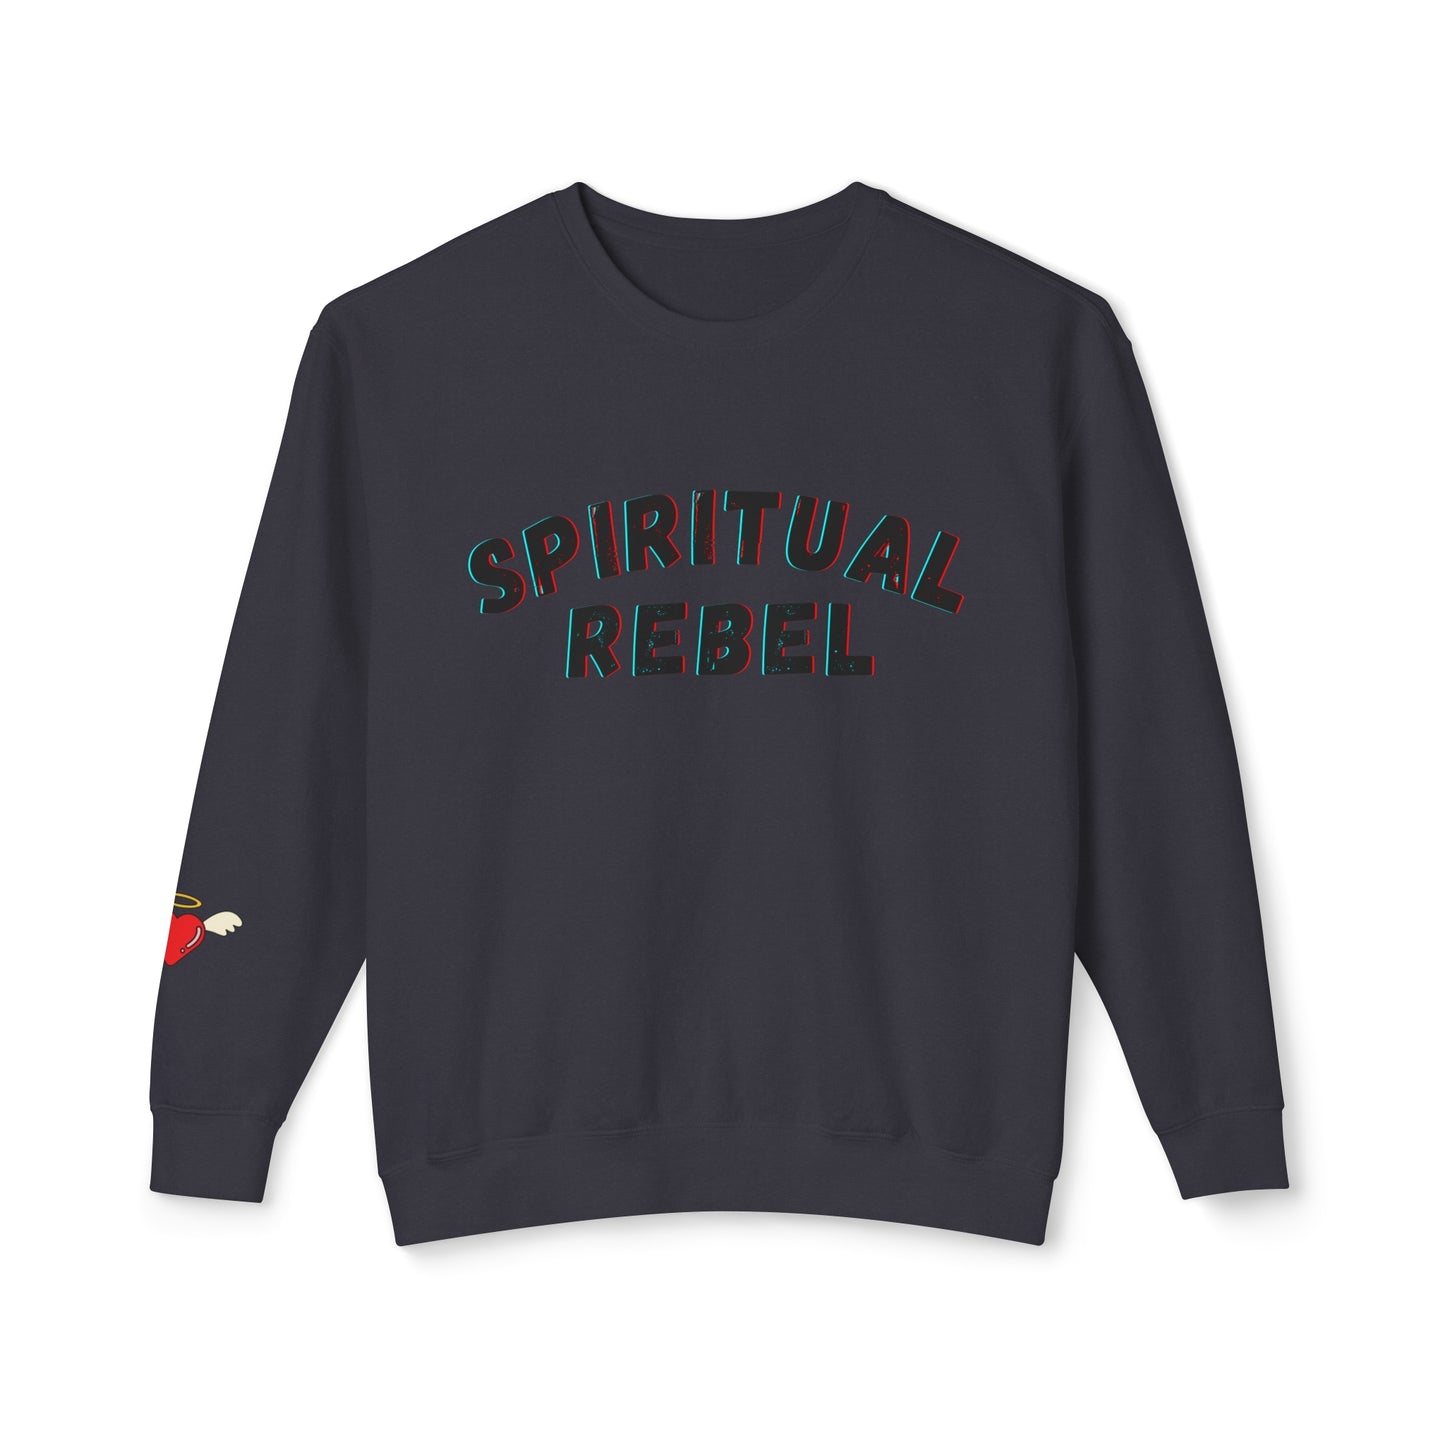 SPIRITUAL REBEL Unisex Lightweight Crewneck Sweatshirt